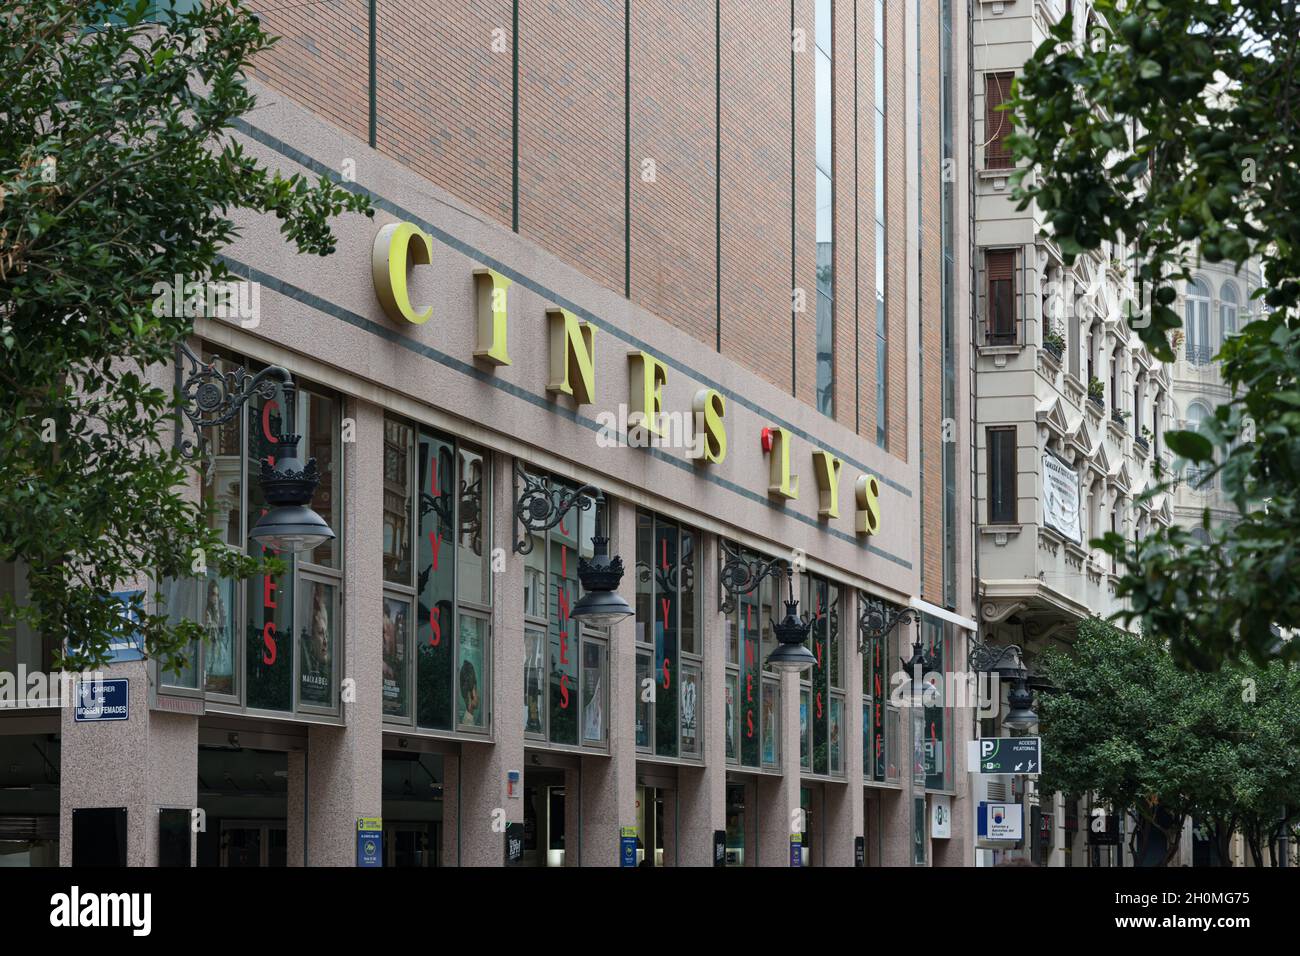 VALENCIA, SPAIN - OCTOBER 03, 2021: Cines Lys , famous movie theater at Valencia city center Stock Photo